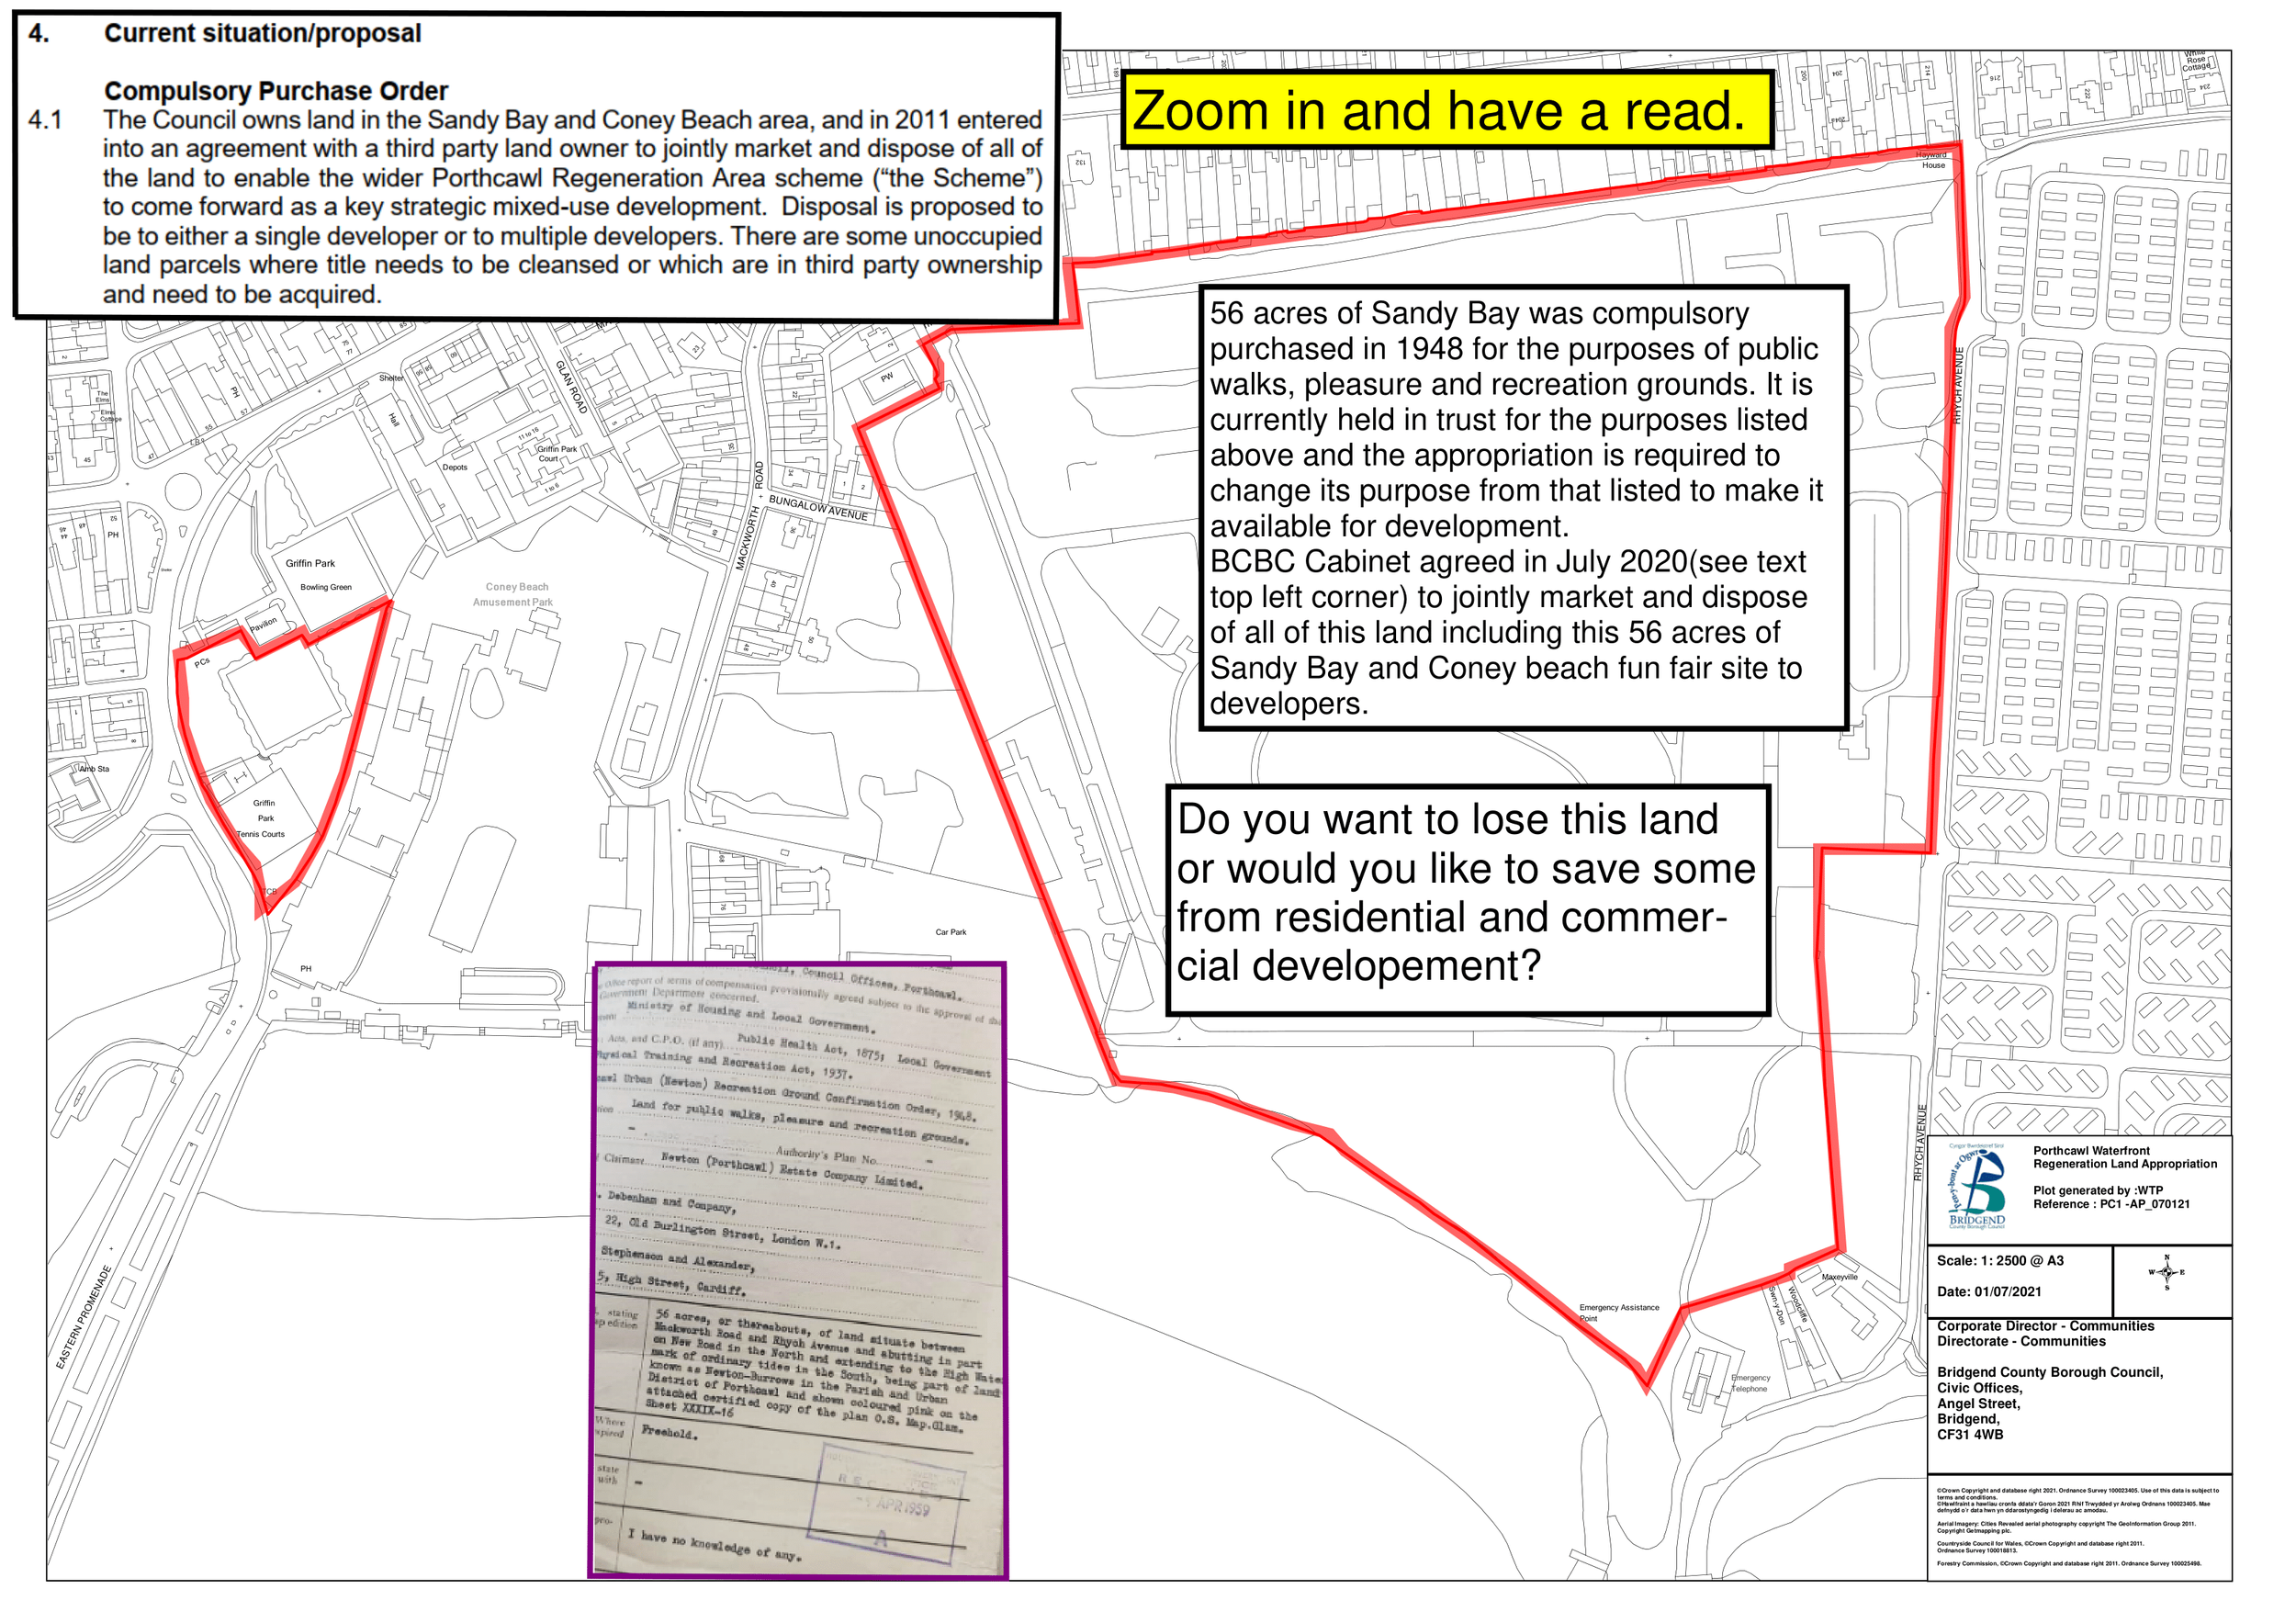 porthcawl-waterfront-regeneration-land-appropriation-plan - explanation-1 (1).png